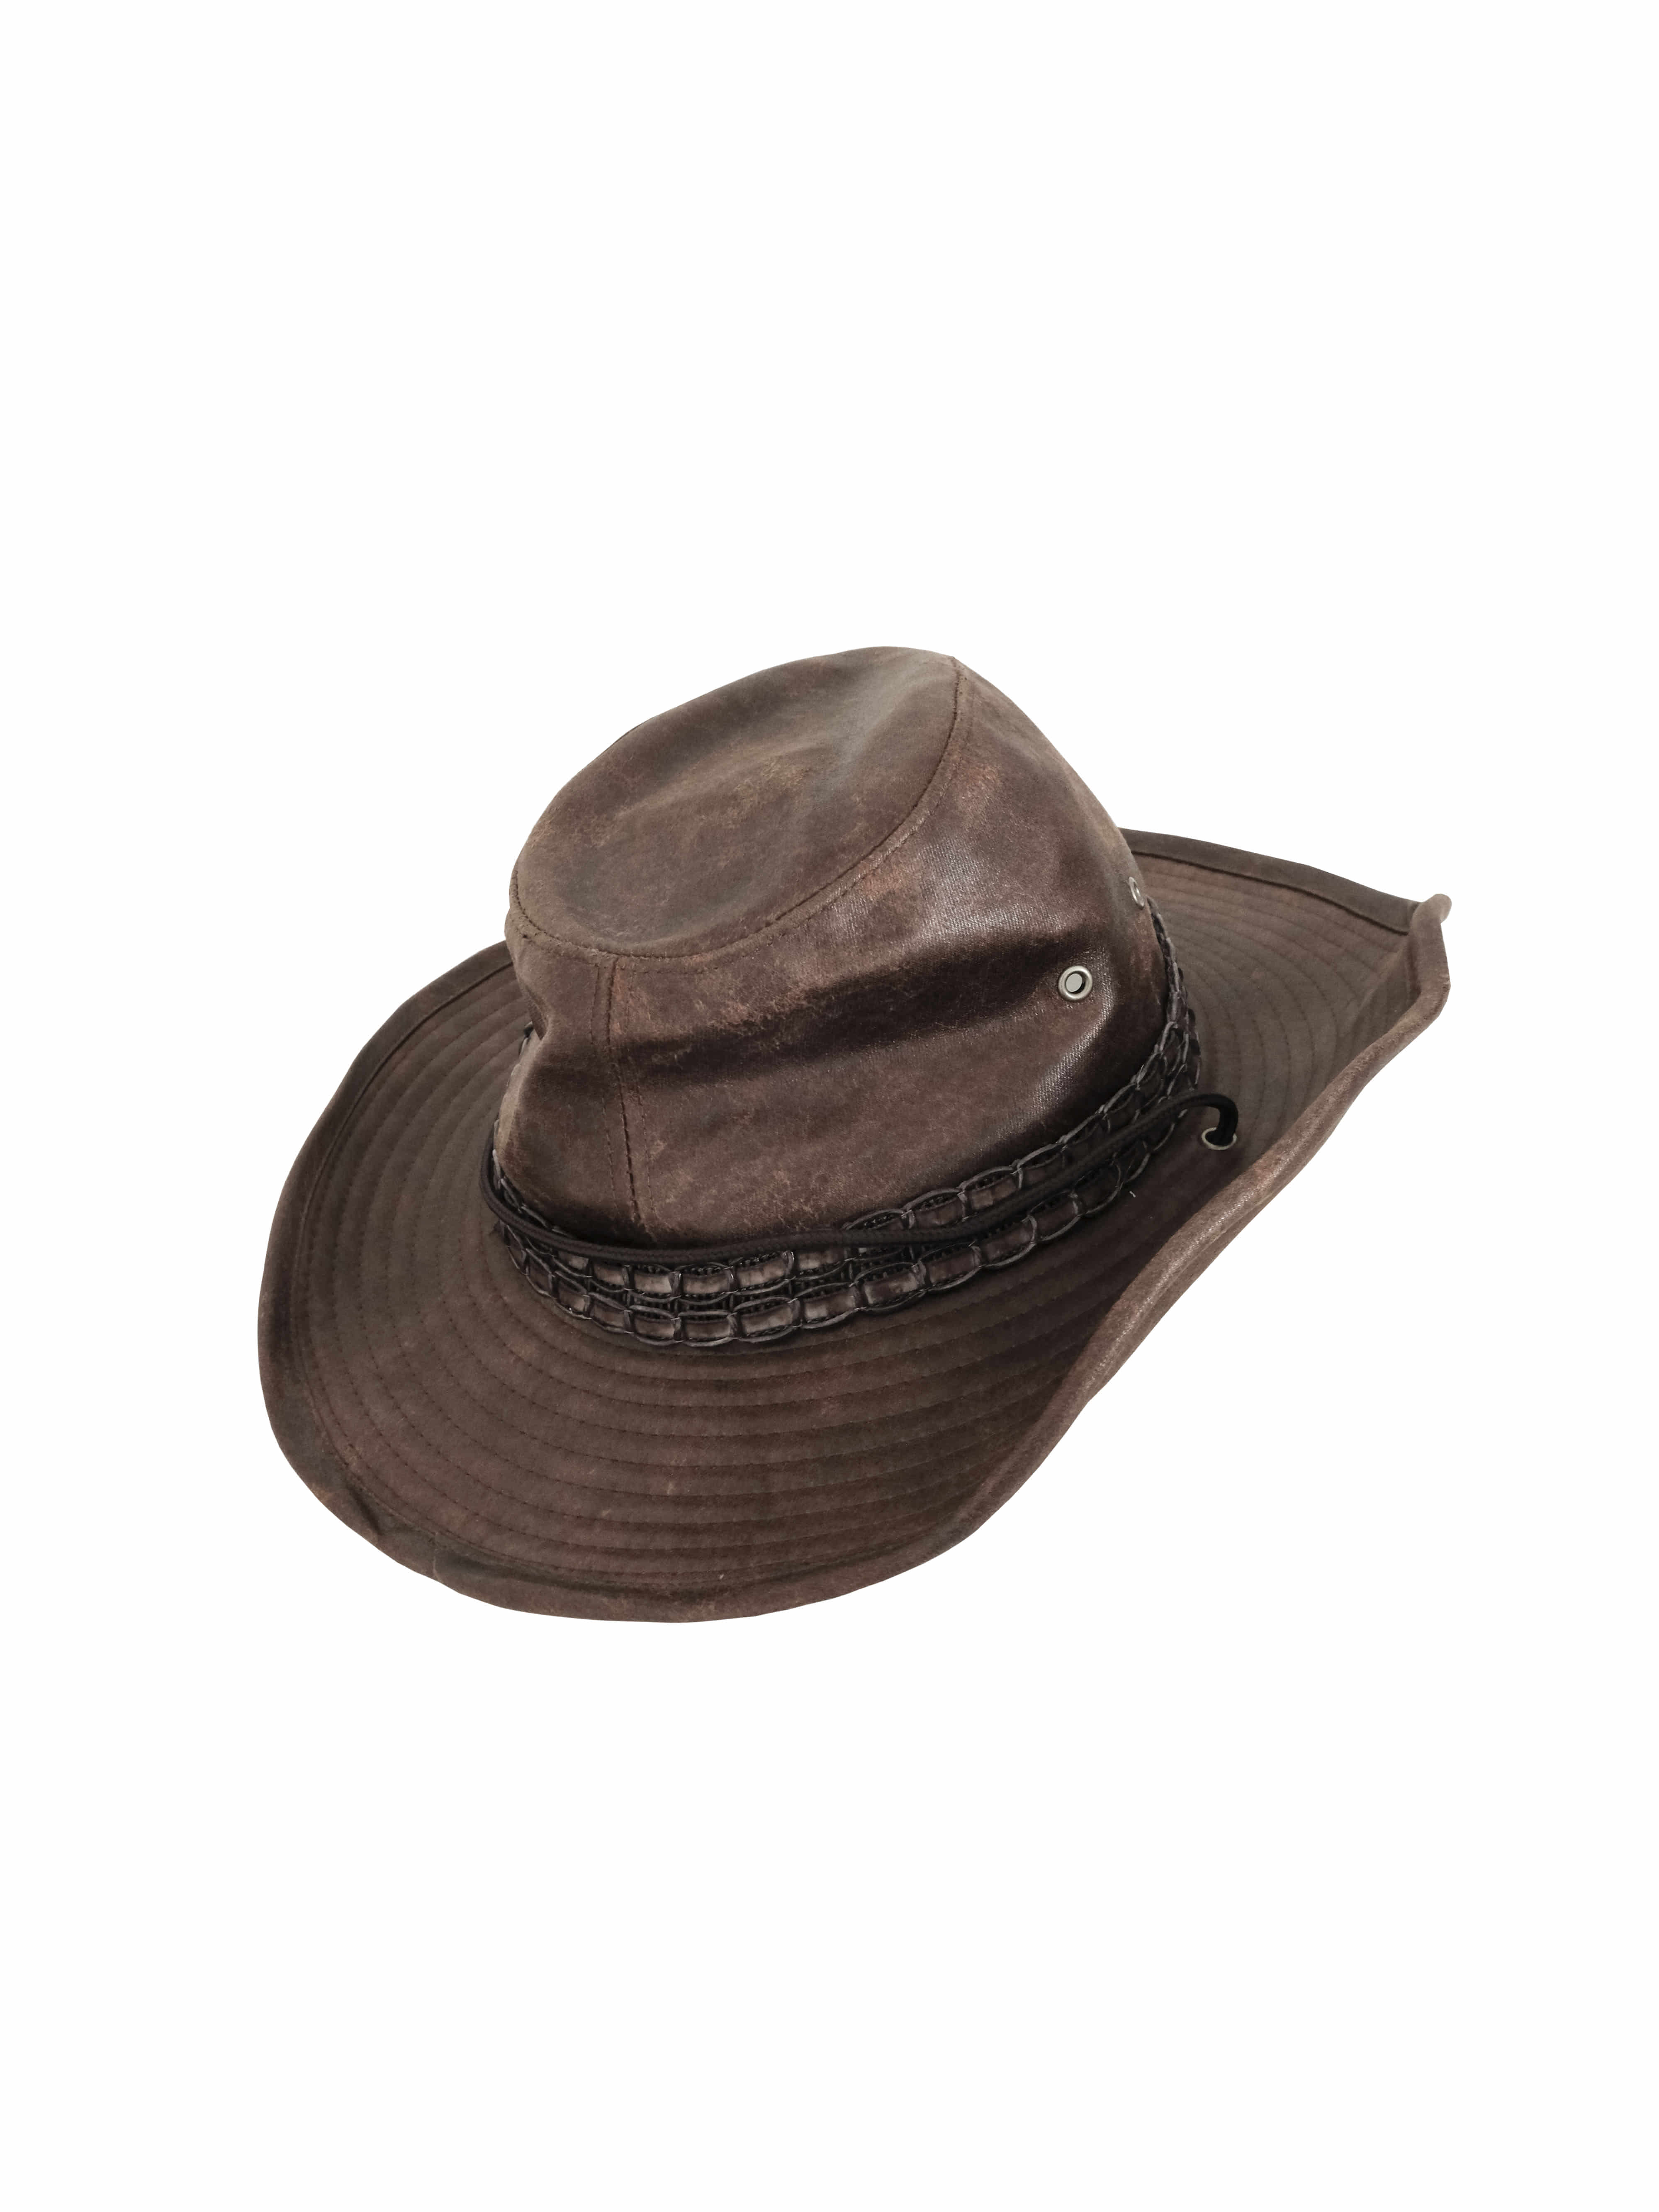 Western pamana hat